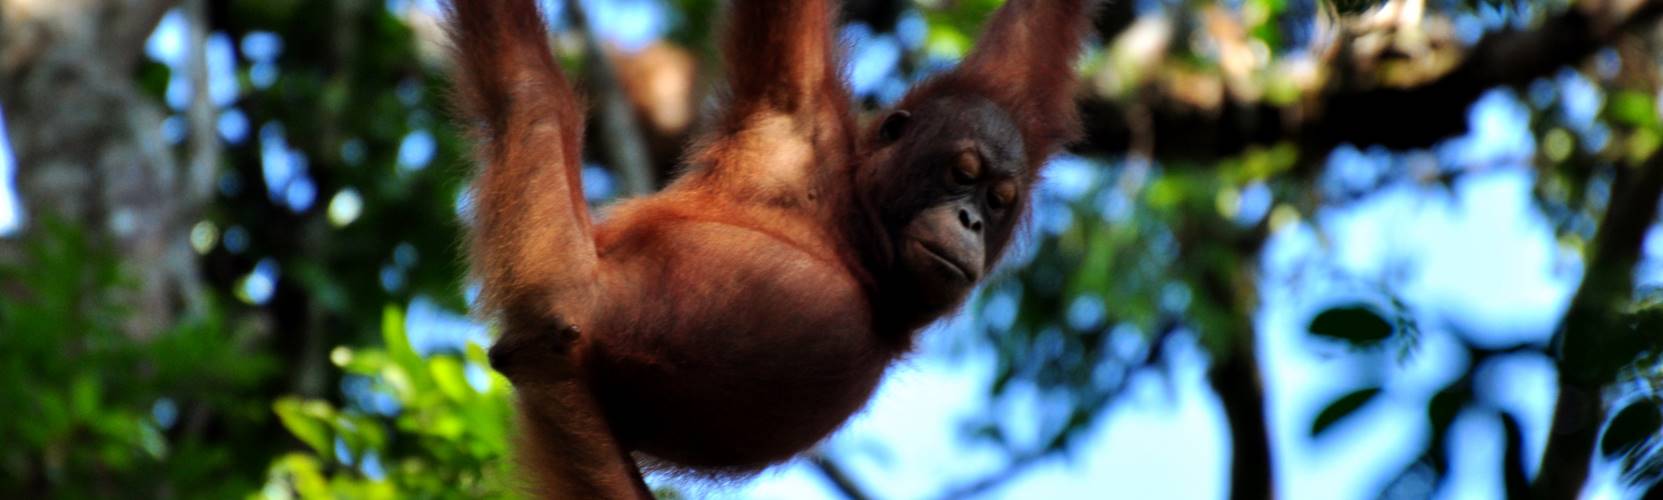 Borneo wildlife orang utan on a rope